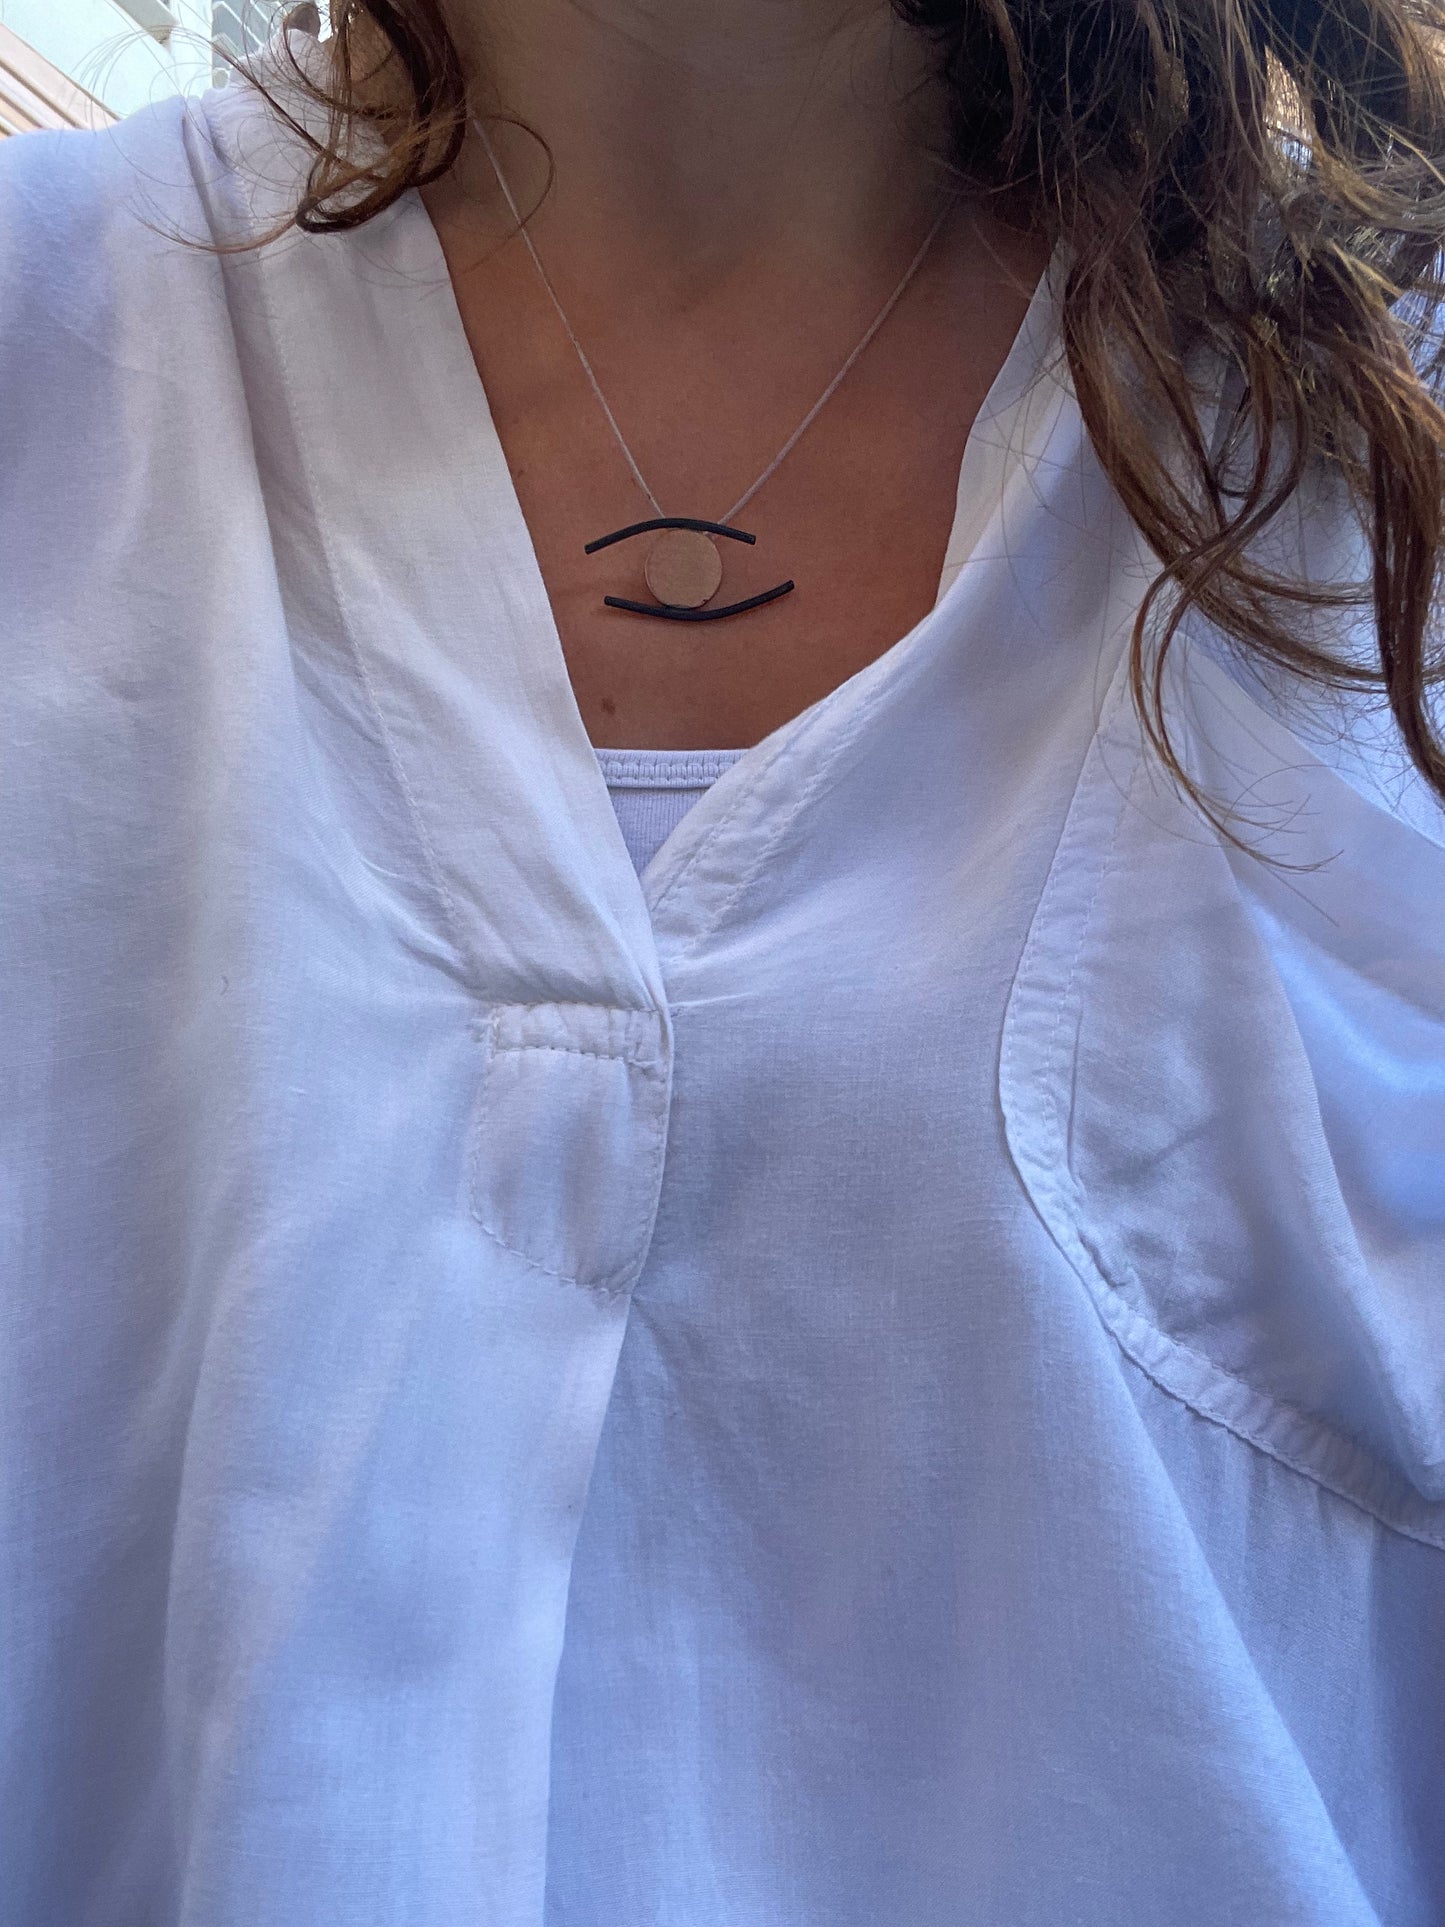 Oxidised copper  necklace | Black - Rose Mataki Necklace - CURIUDO